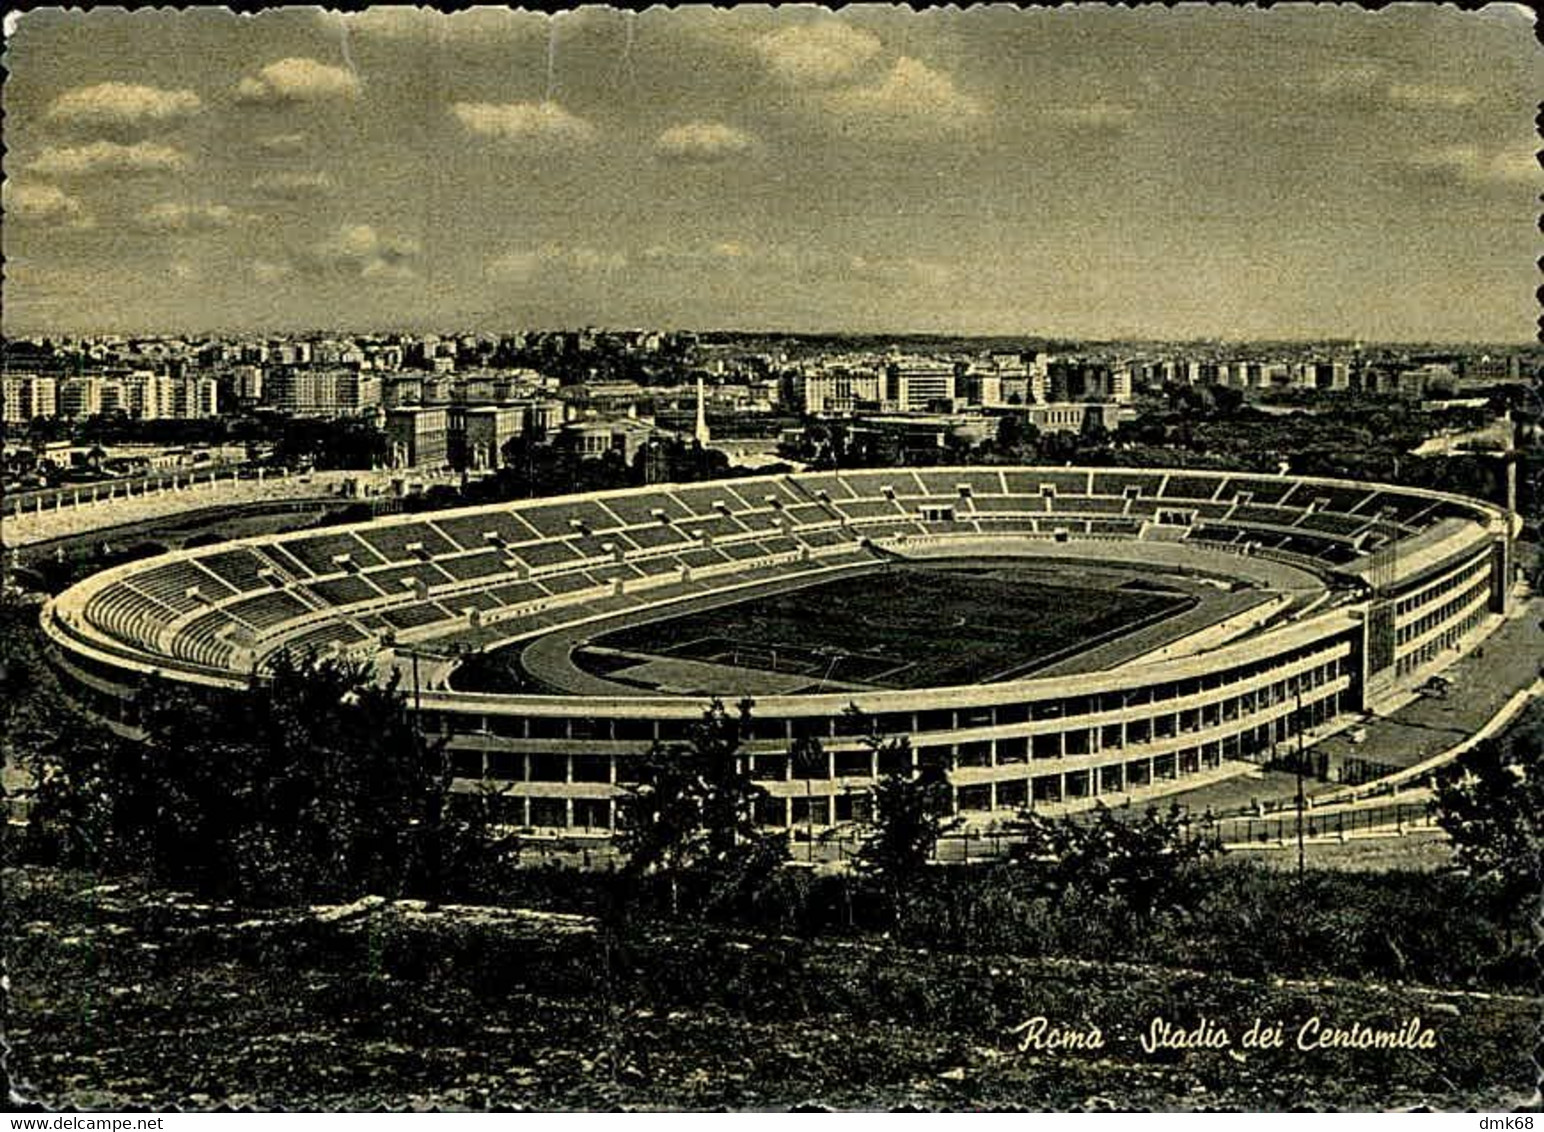 ROMA - STADIUM / STADIO DEI CENTOMILA - EDIZIONE CESARE CAPELLI - 1950s (10522) - Stades & Structures Sportives